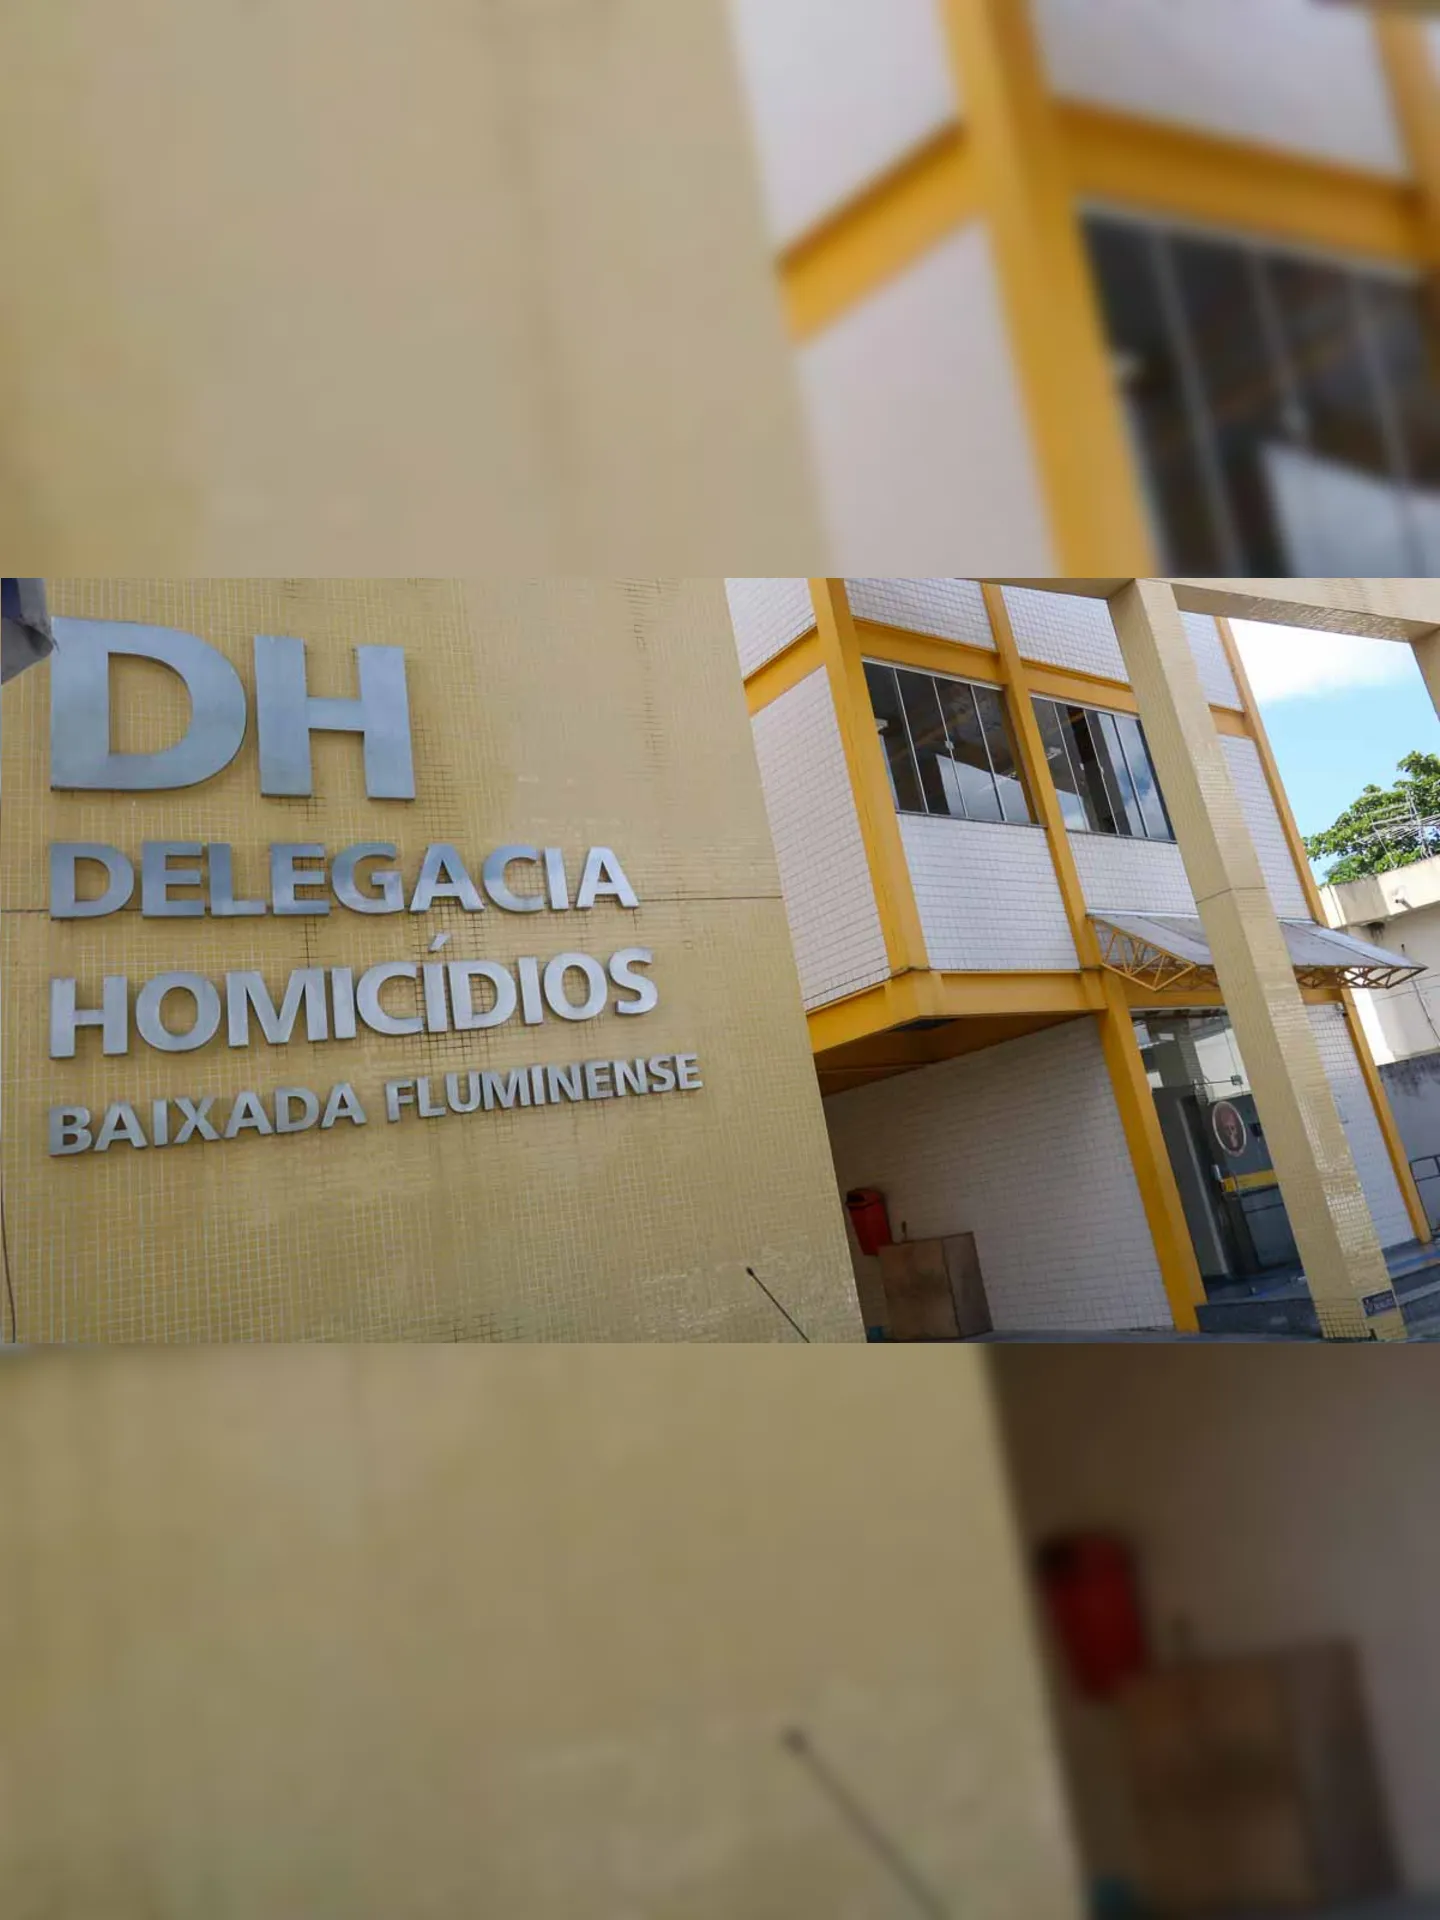 Agentes da delegacia de Homicídios da Baixada Fluminense investigam o caso